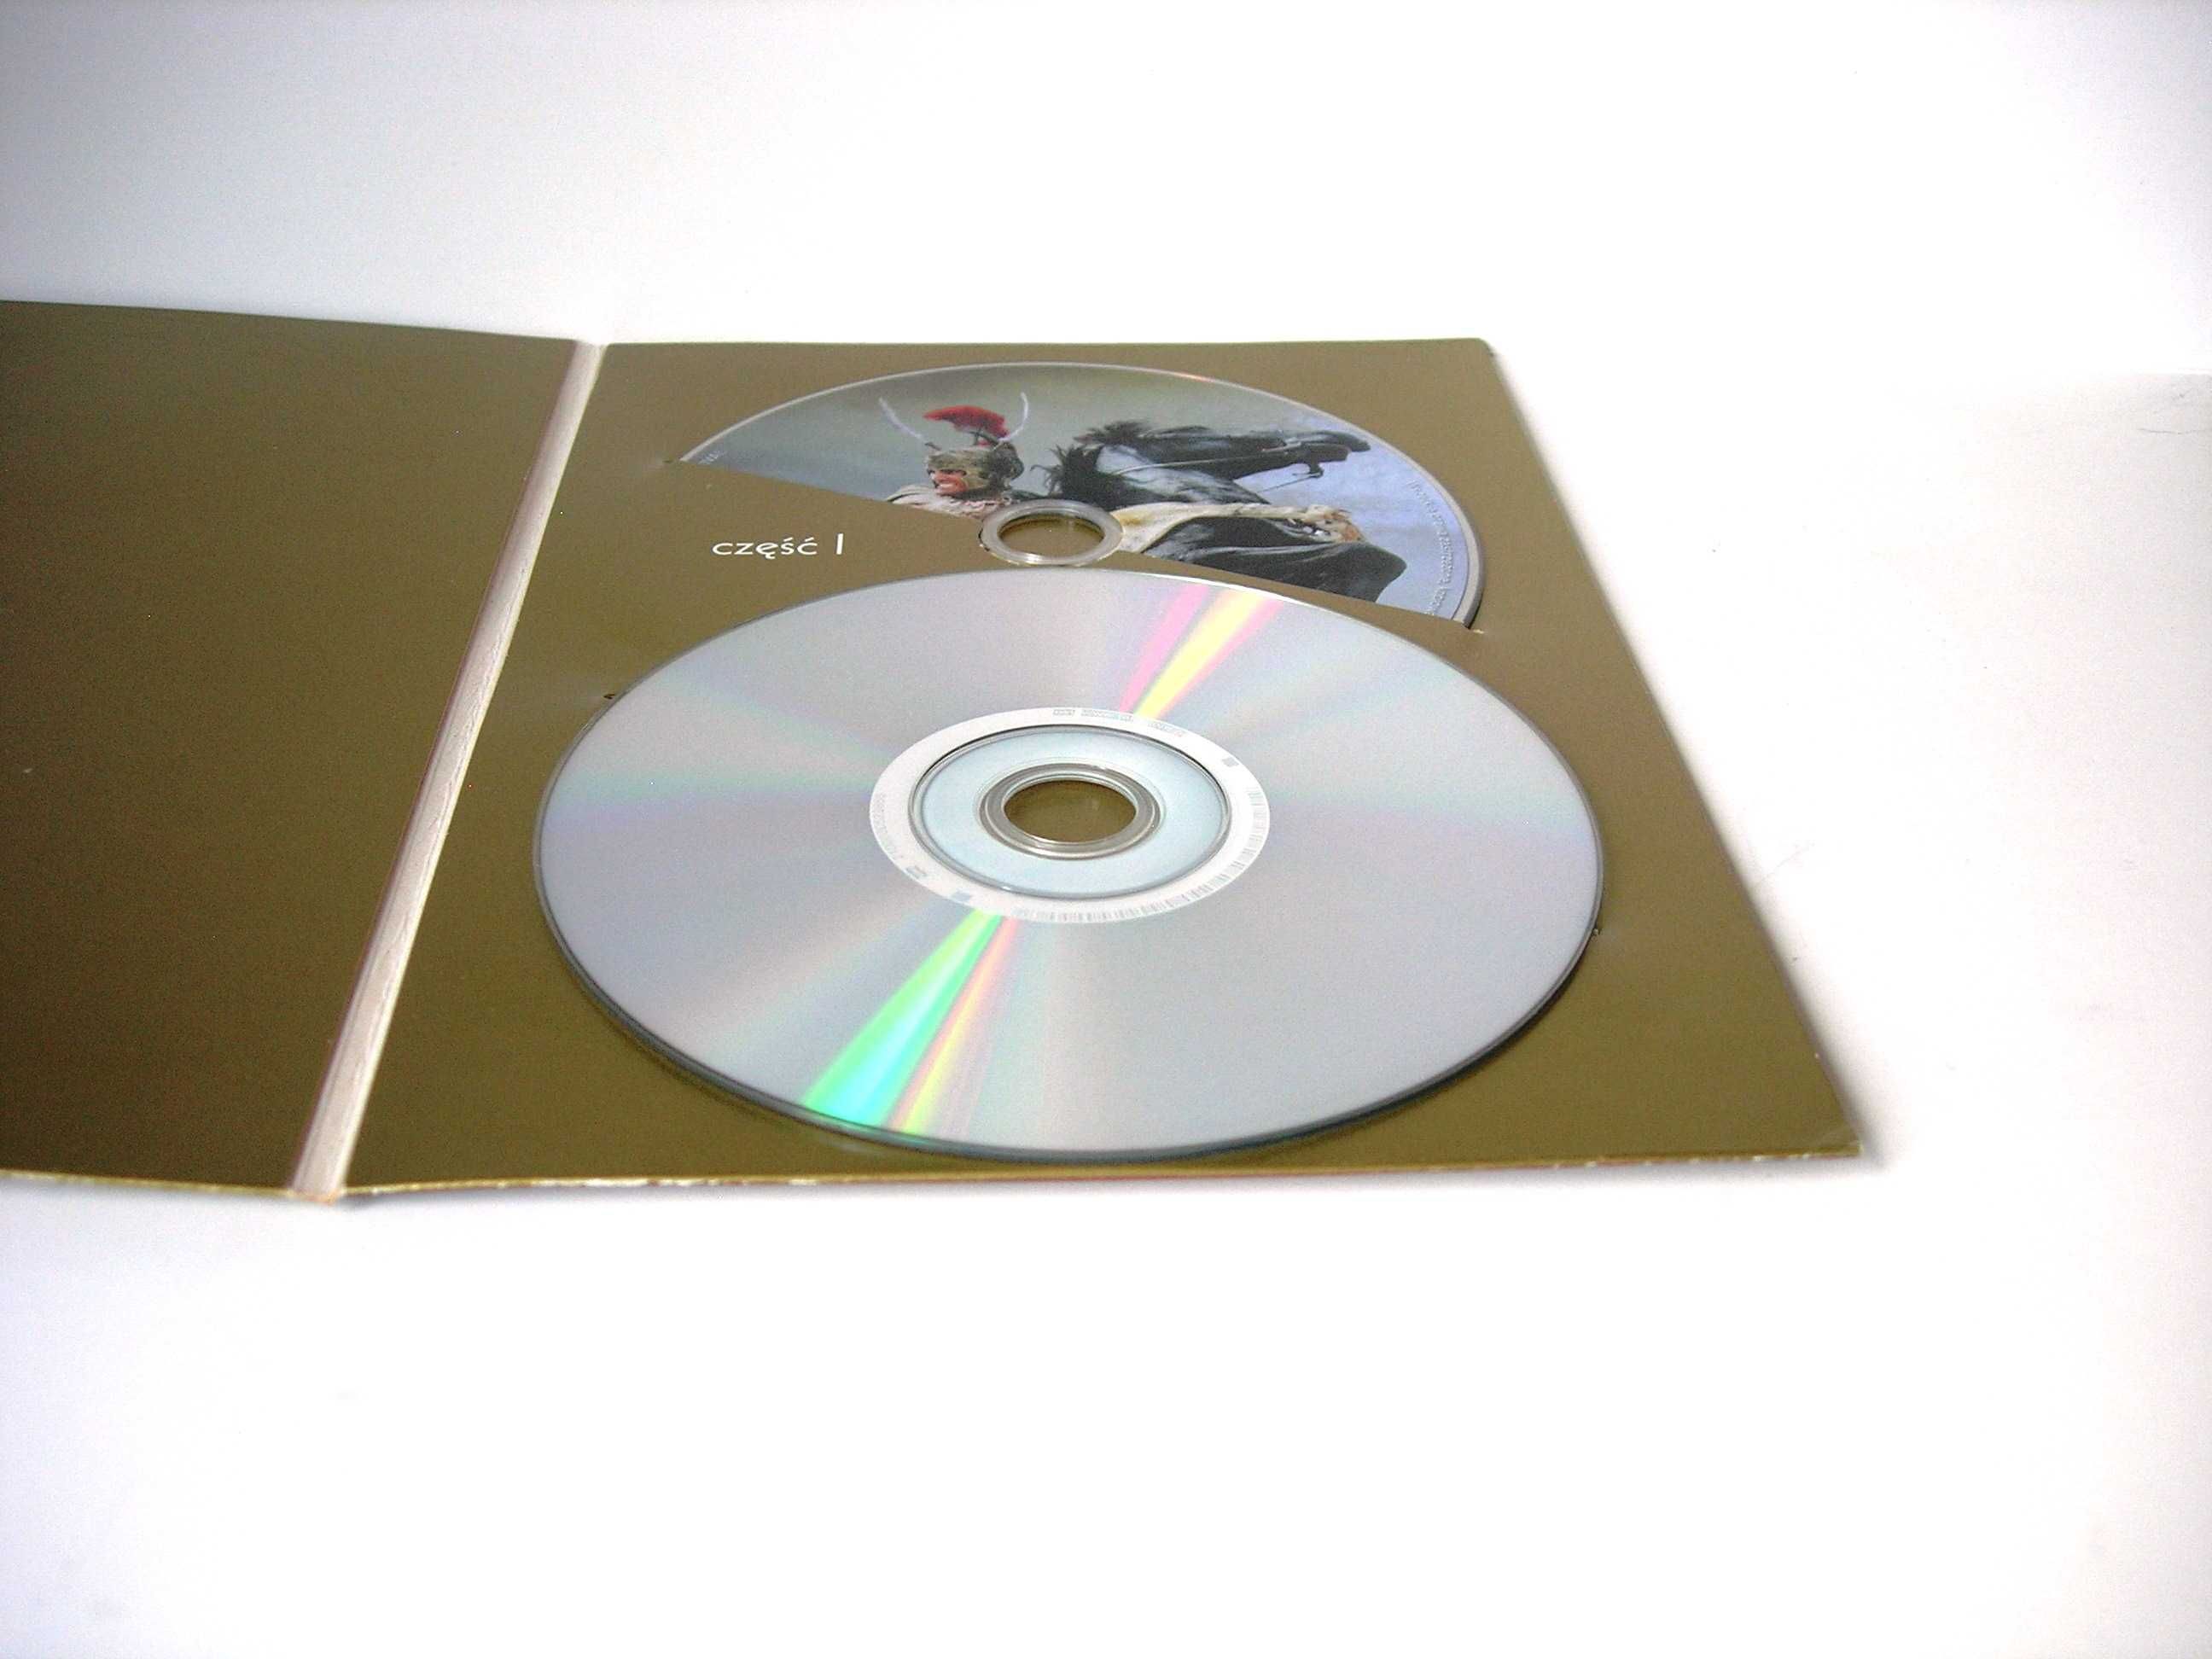 "Aleksander" 2 DVD Oliver Stone 2004 Intermedia Films